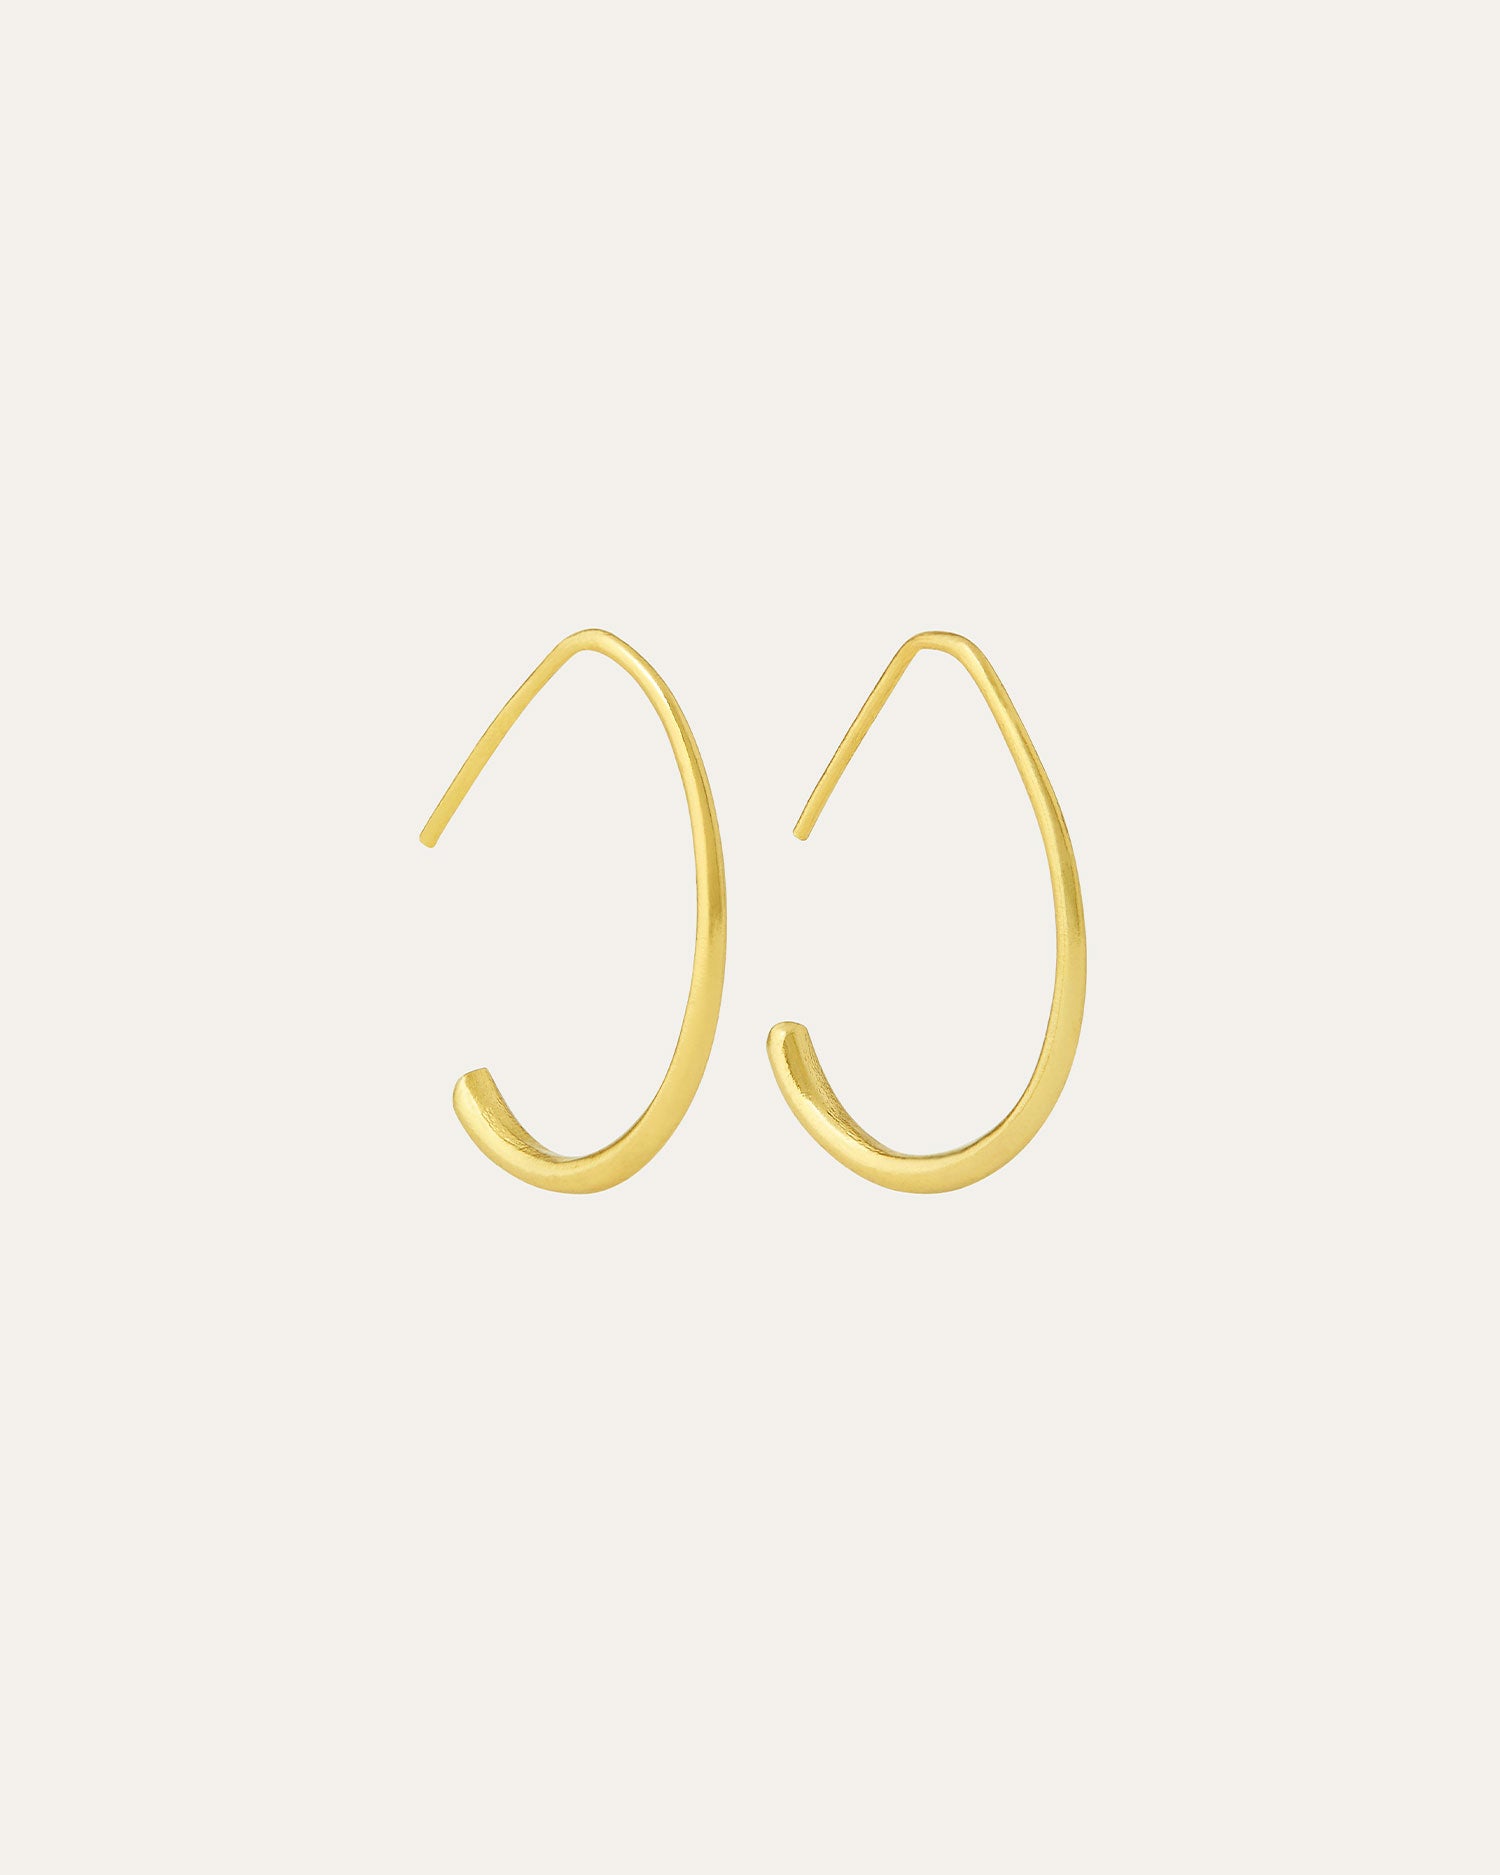 Allegra Oval Hoop Earrings | Sustainable Jewellery by Ottoman Hands